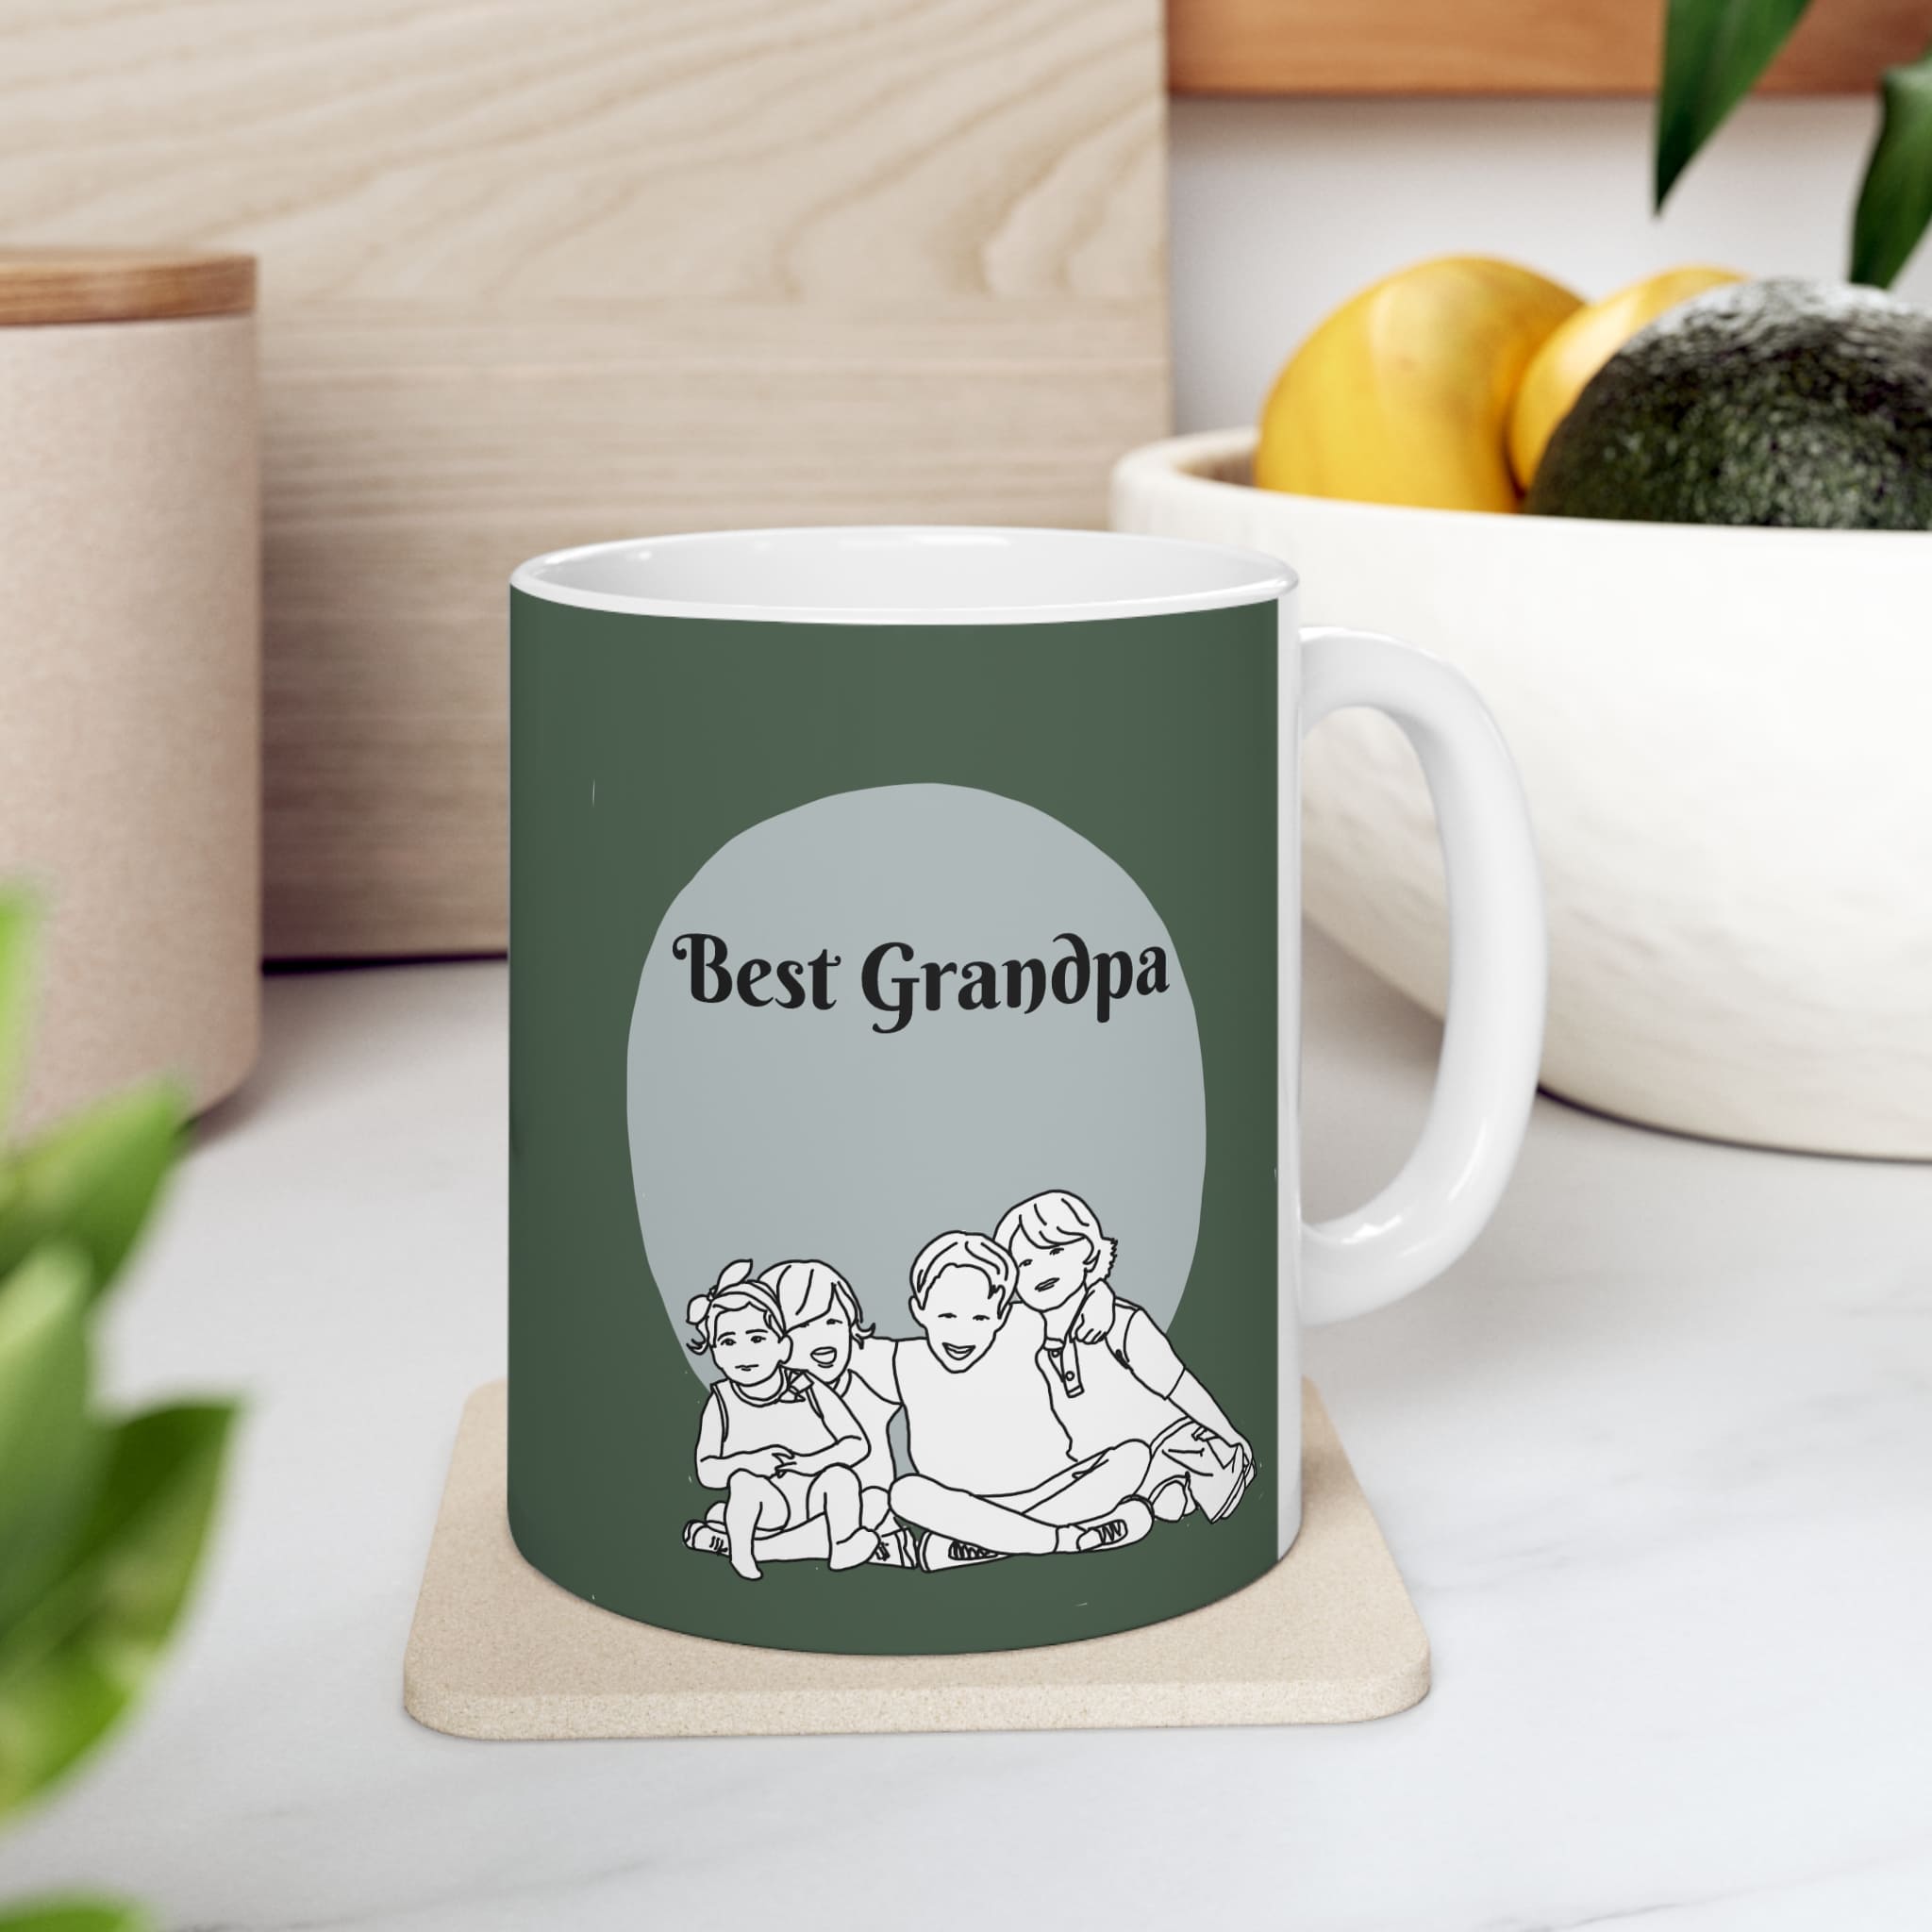 Best grandpa custom line art portrait mug of grand kids ideal grandads gift scene